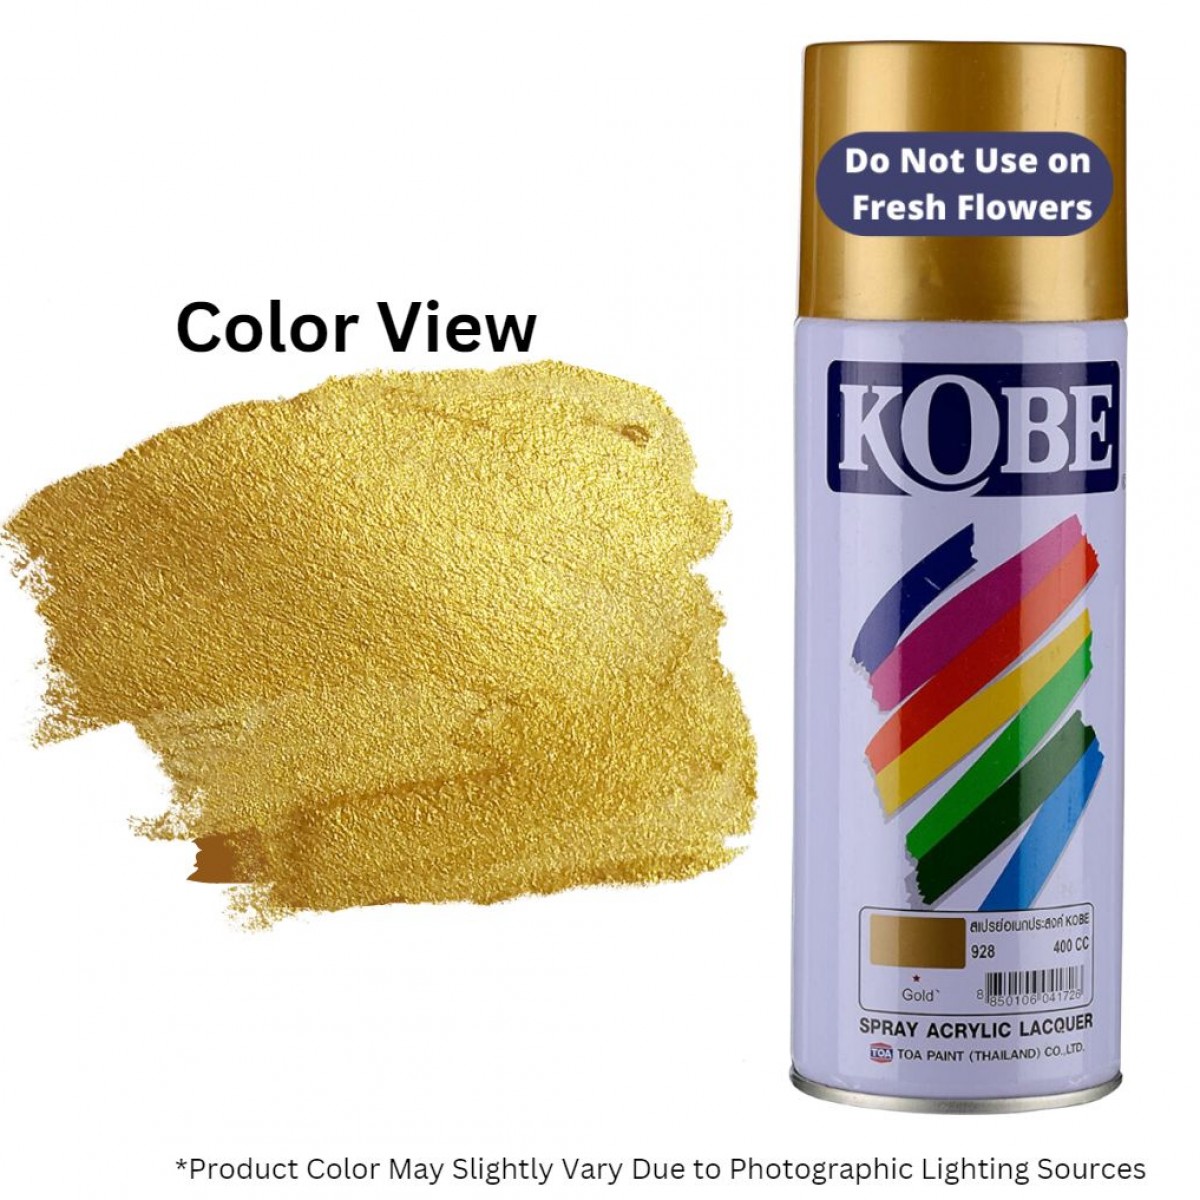 Just Spray ( Thailand) yellow Fabric spray paint